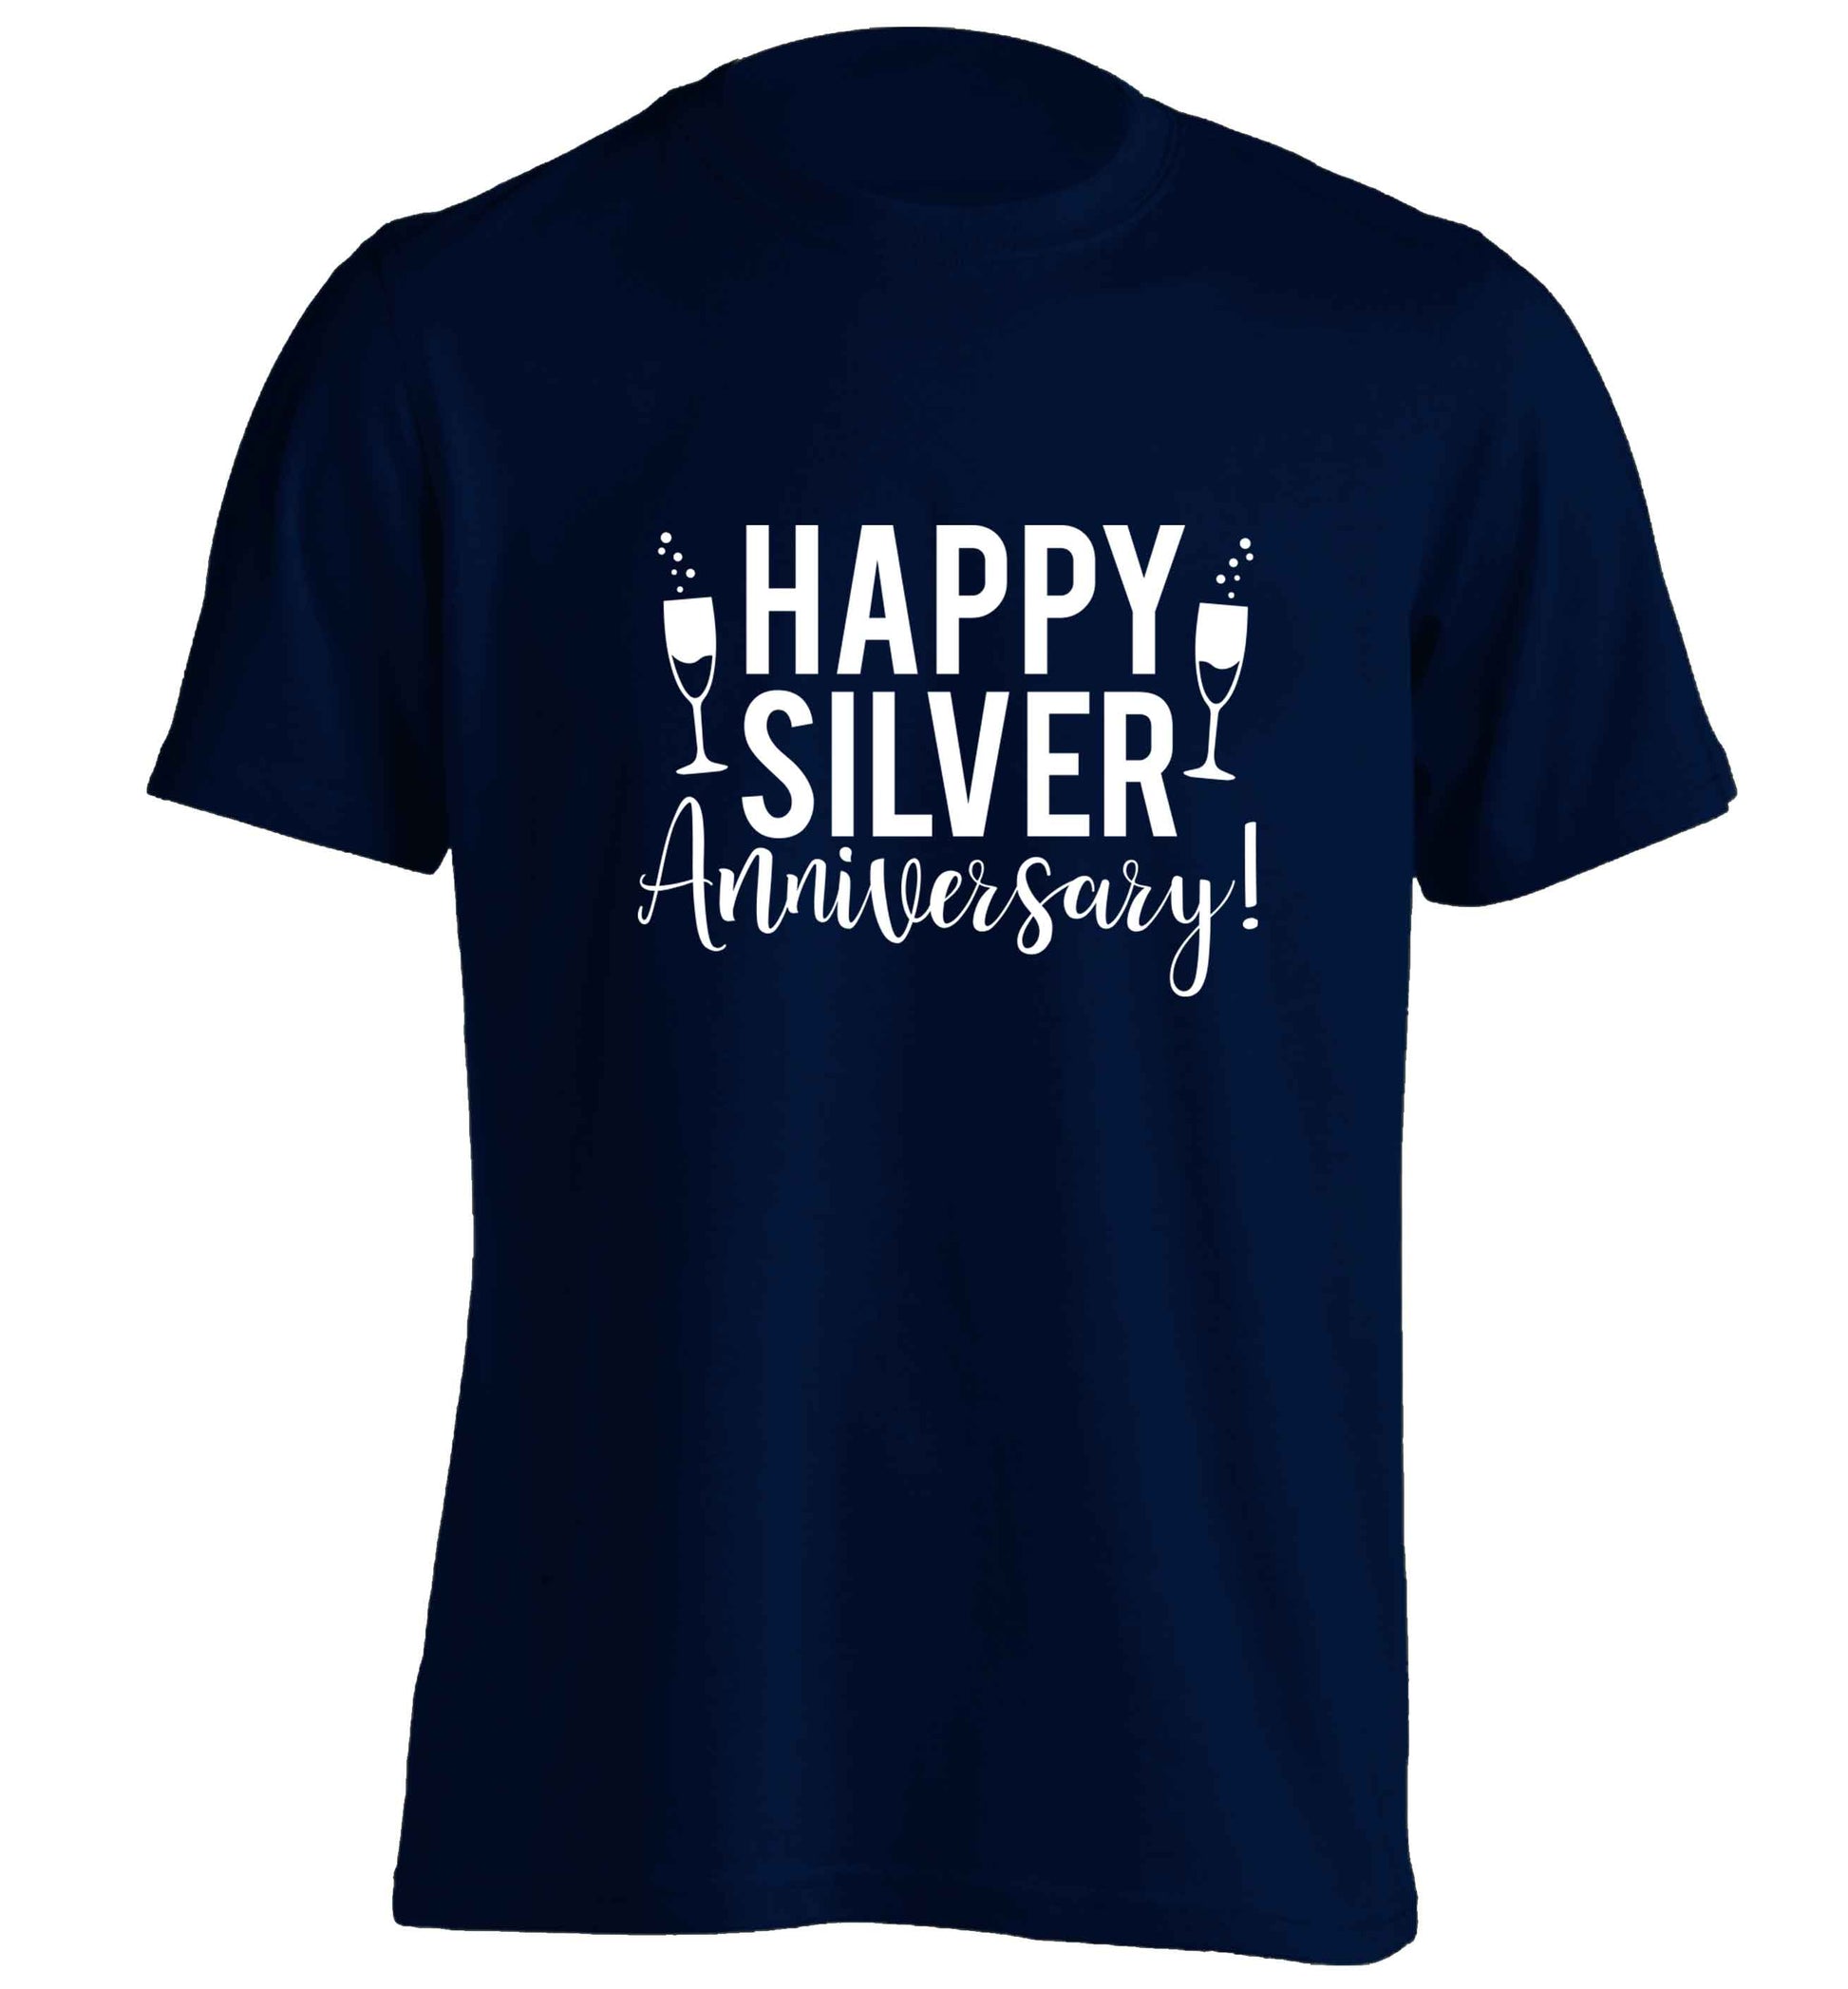 Happy silver anniversary! adults unisex navy Tshirt 2XL